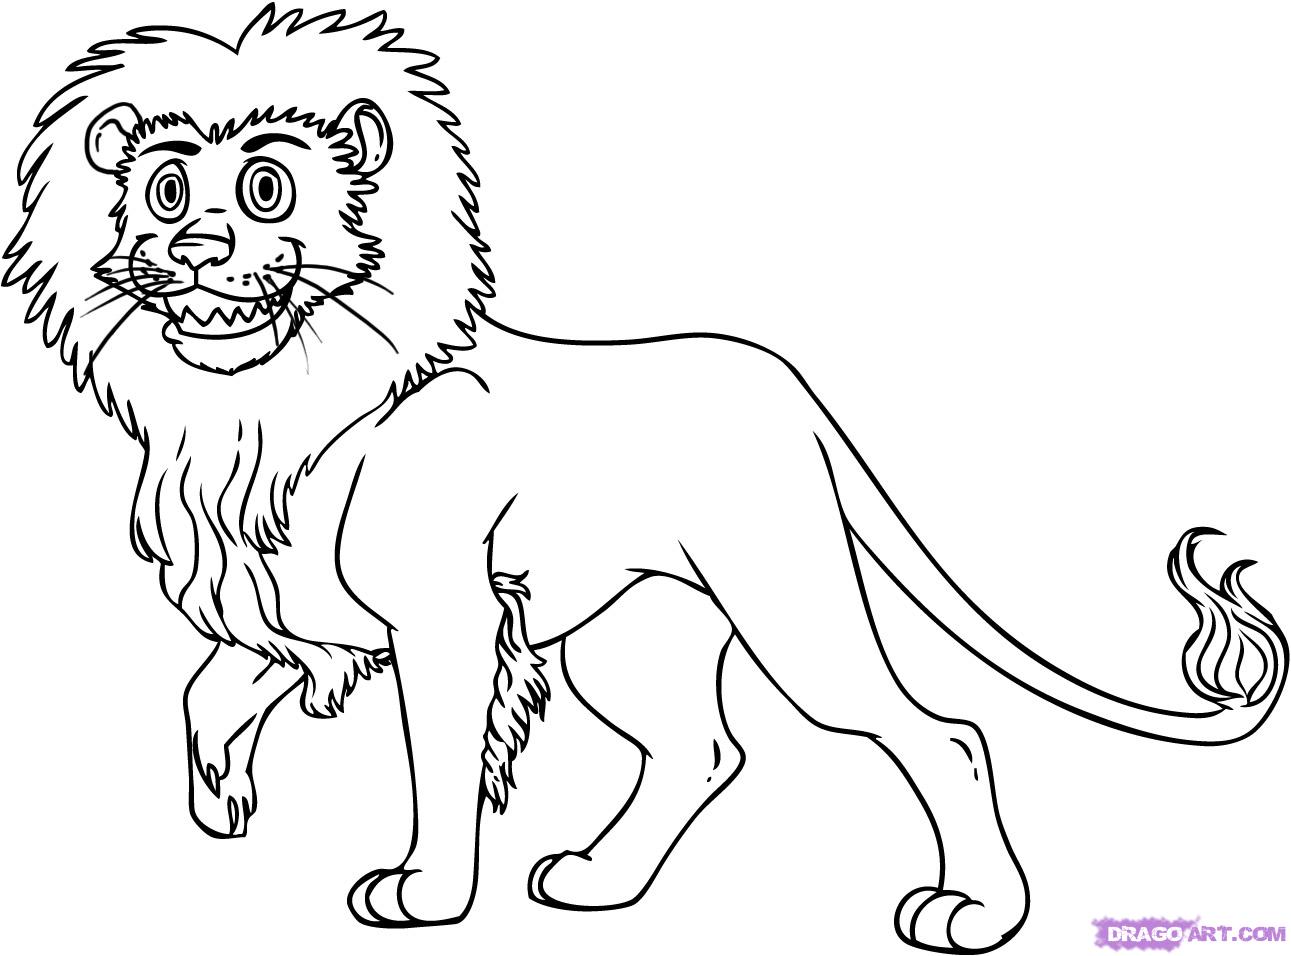 How to Draw a Cartoon Lion, Step by Step, Cartoon Animals, Animals ...